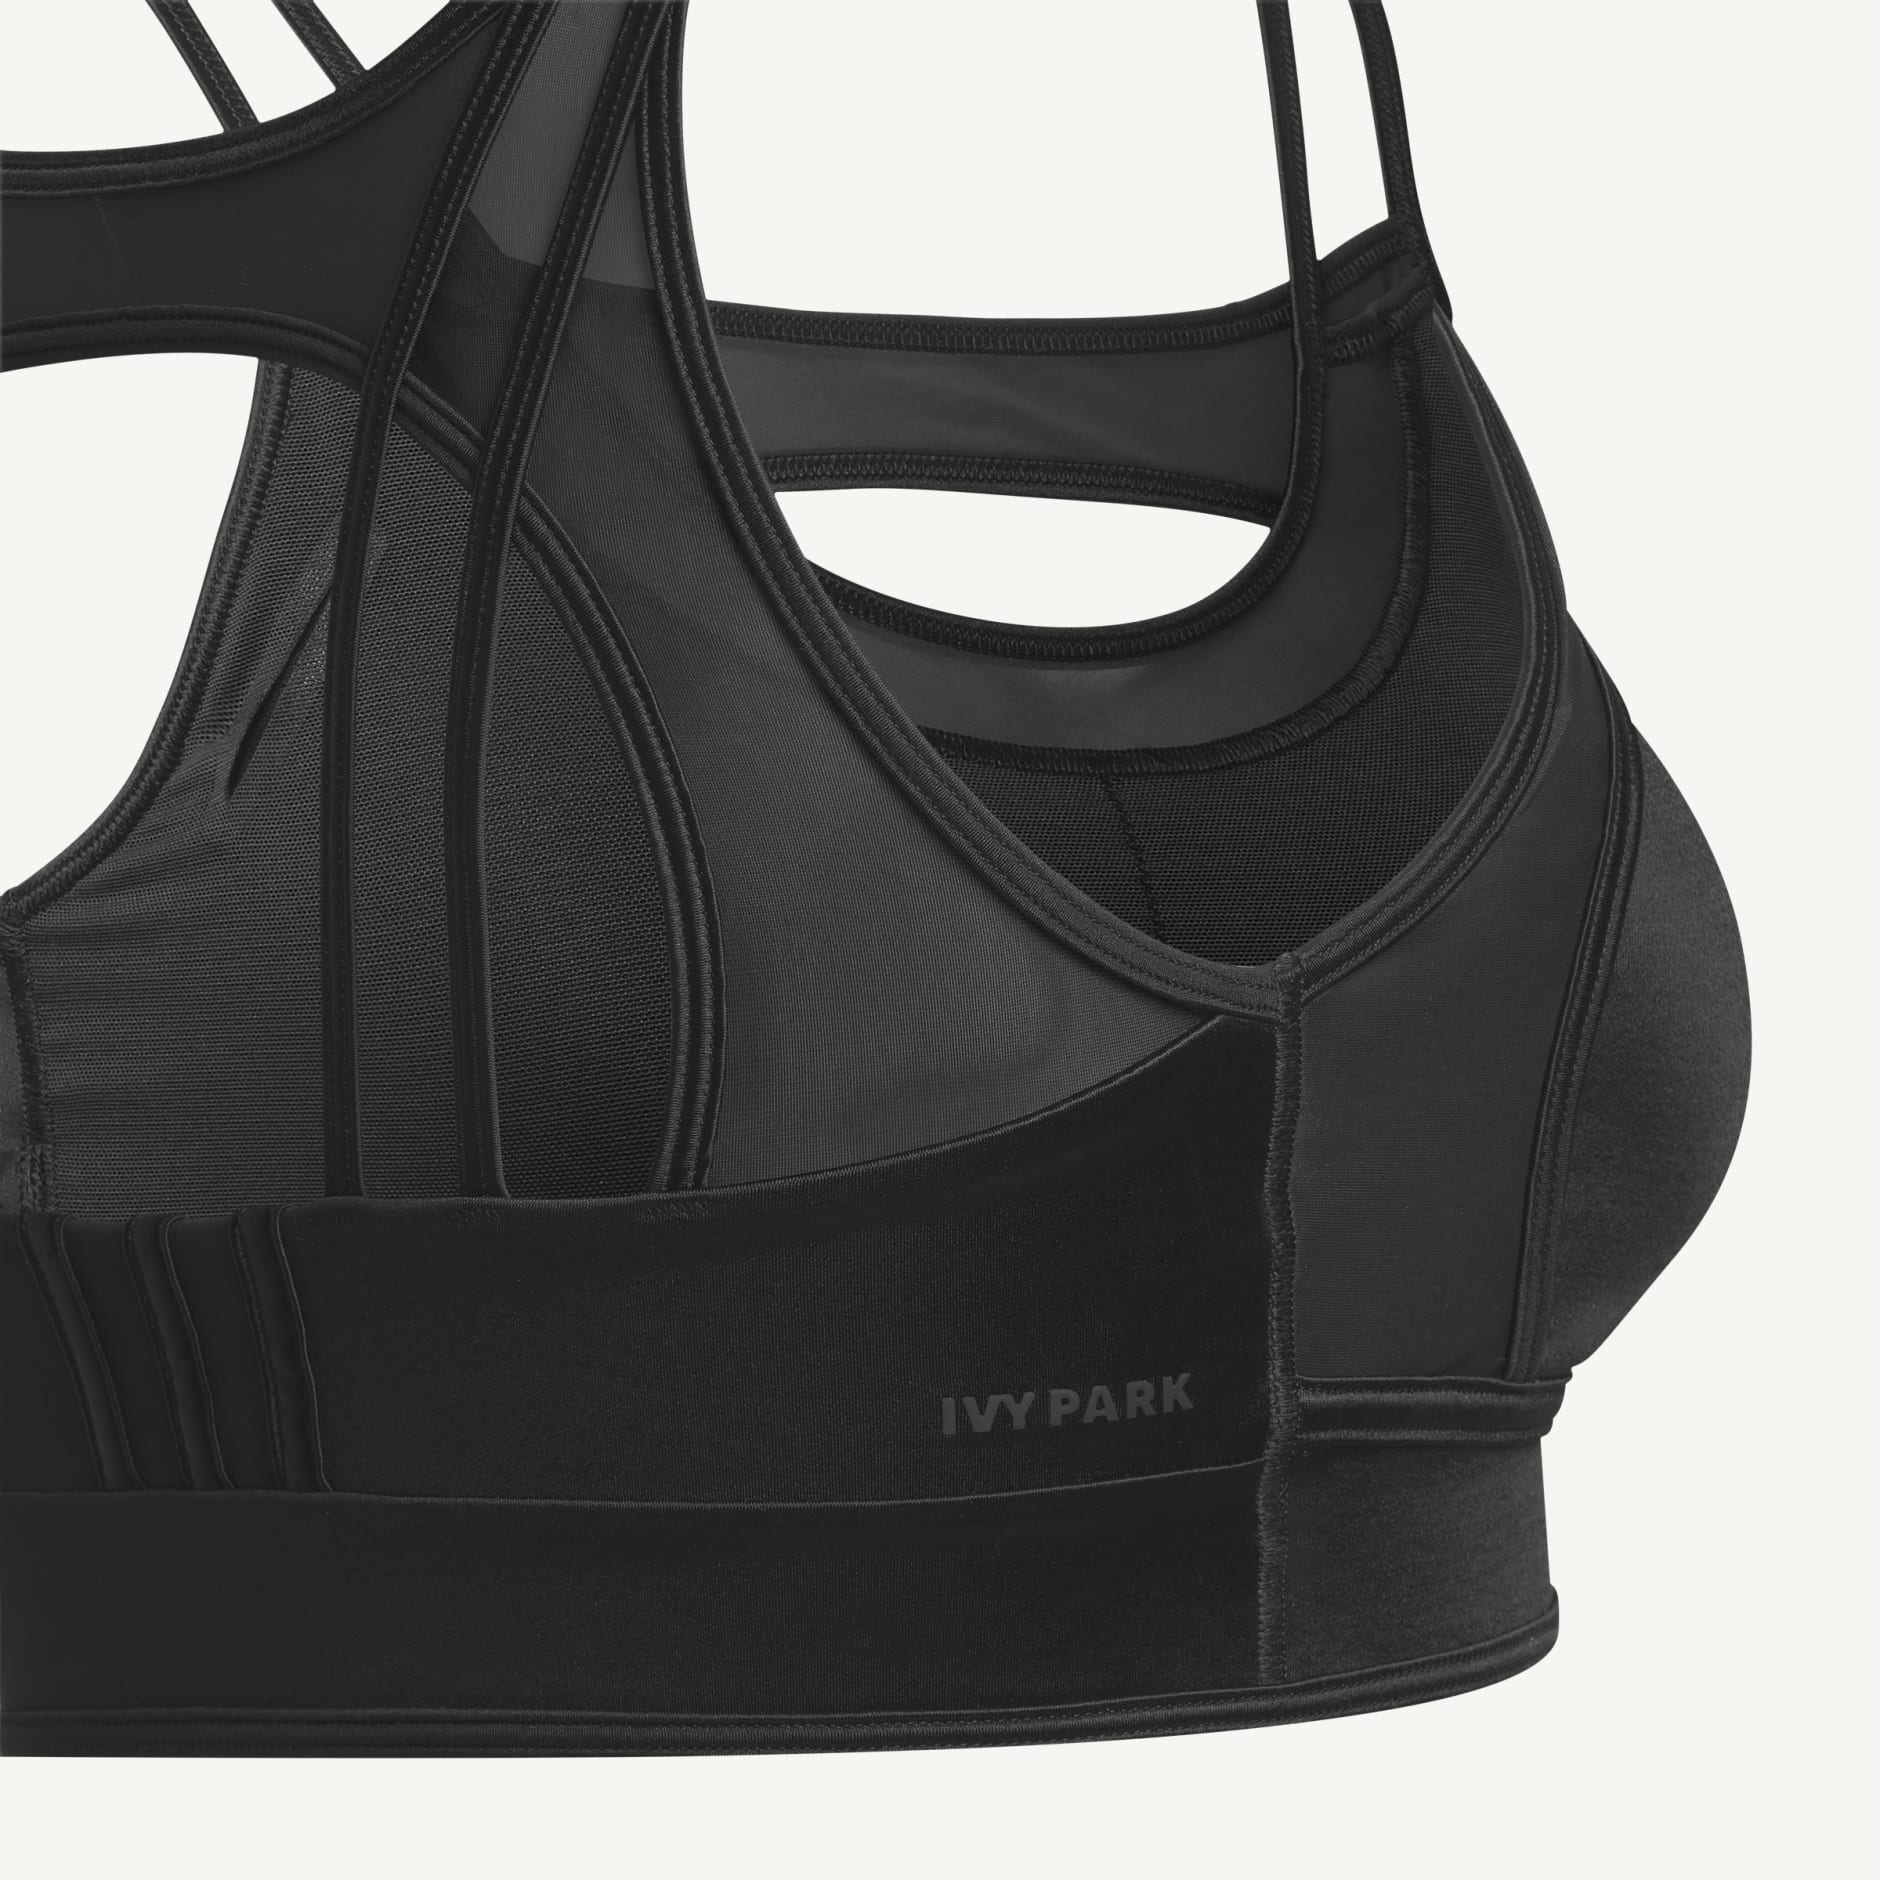 Adidas Women's Ivy Park Black Zip Bra Size xs FREE SHIPPING GT8998